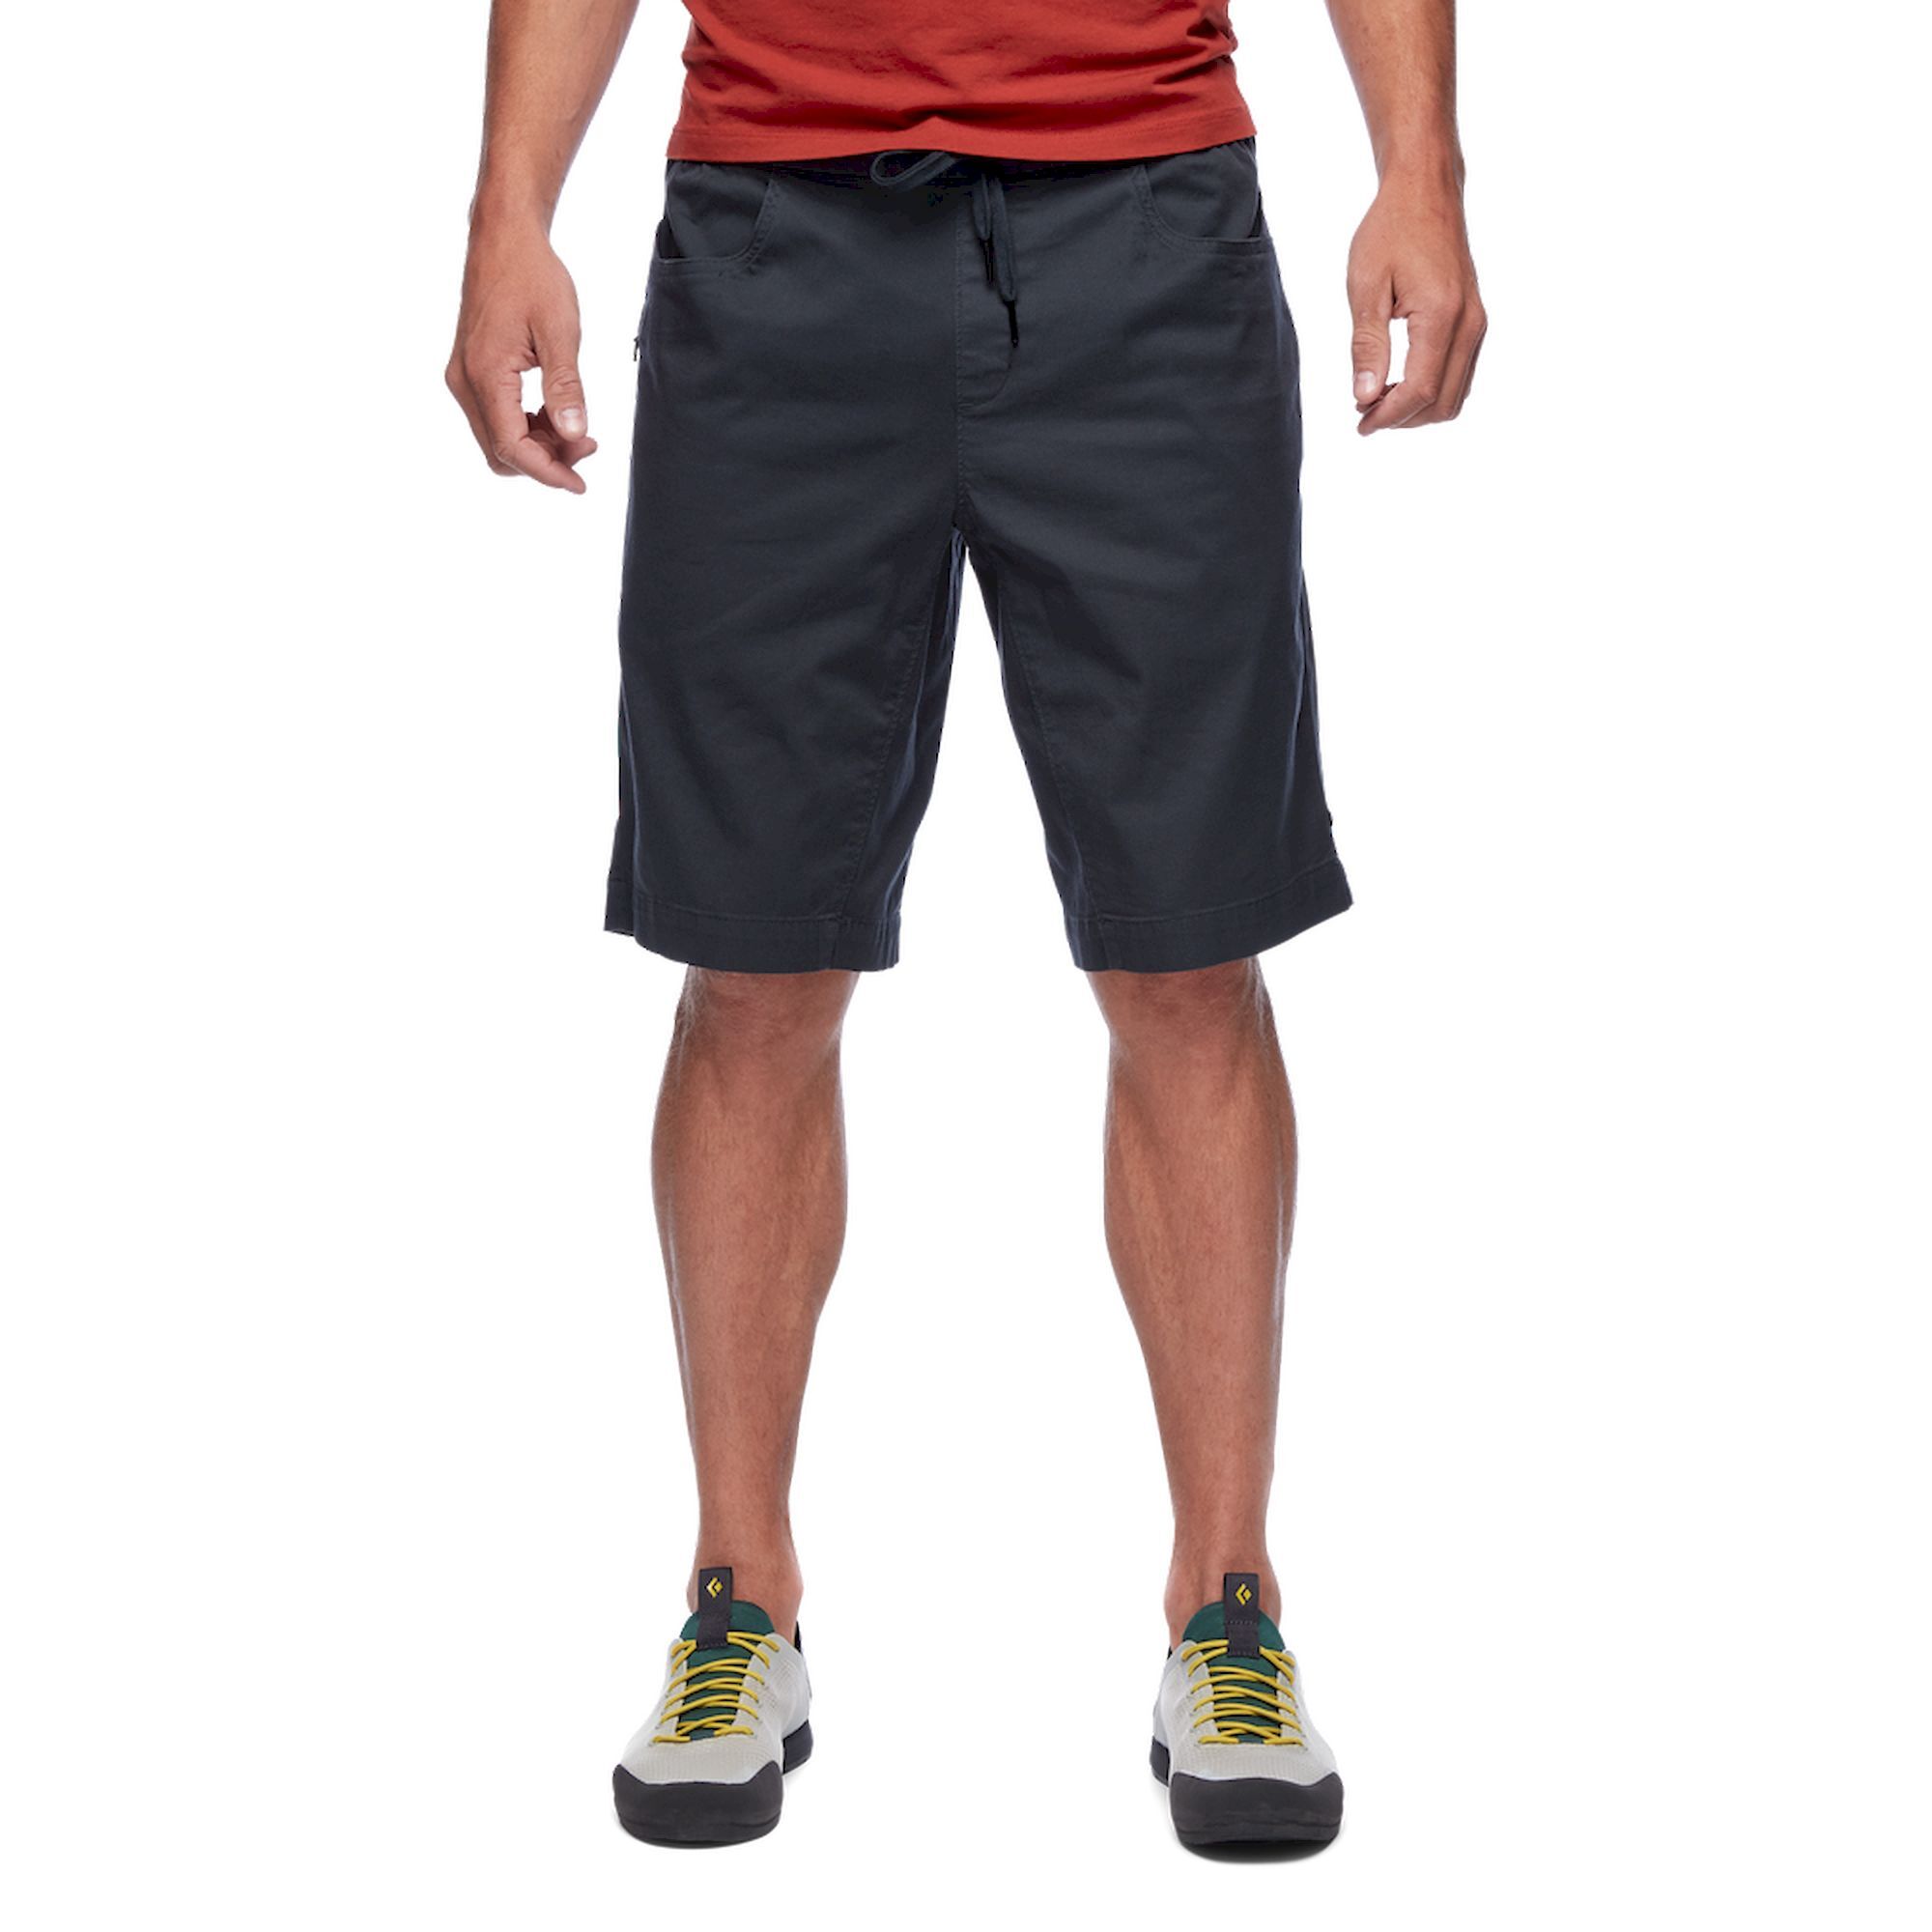 Black Diamond Notion Shorts - Climbing shorts - Men's